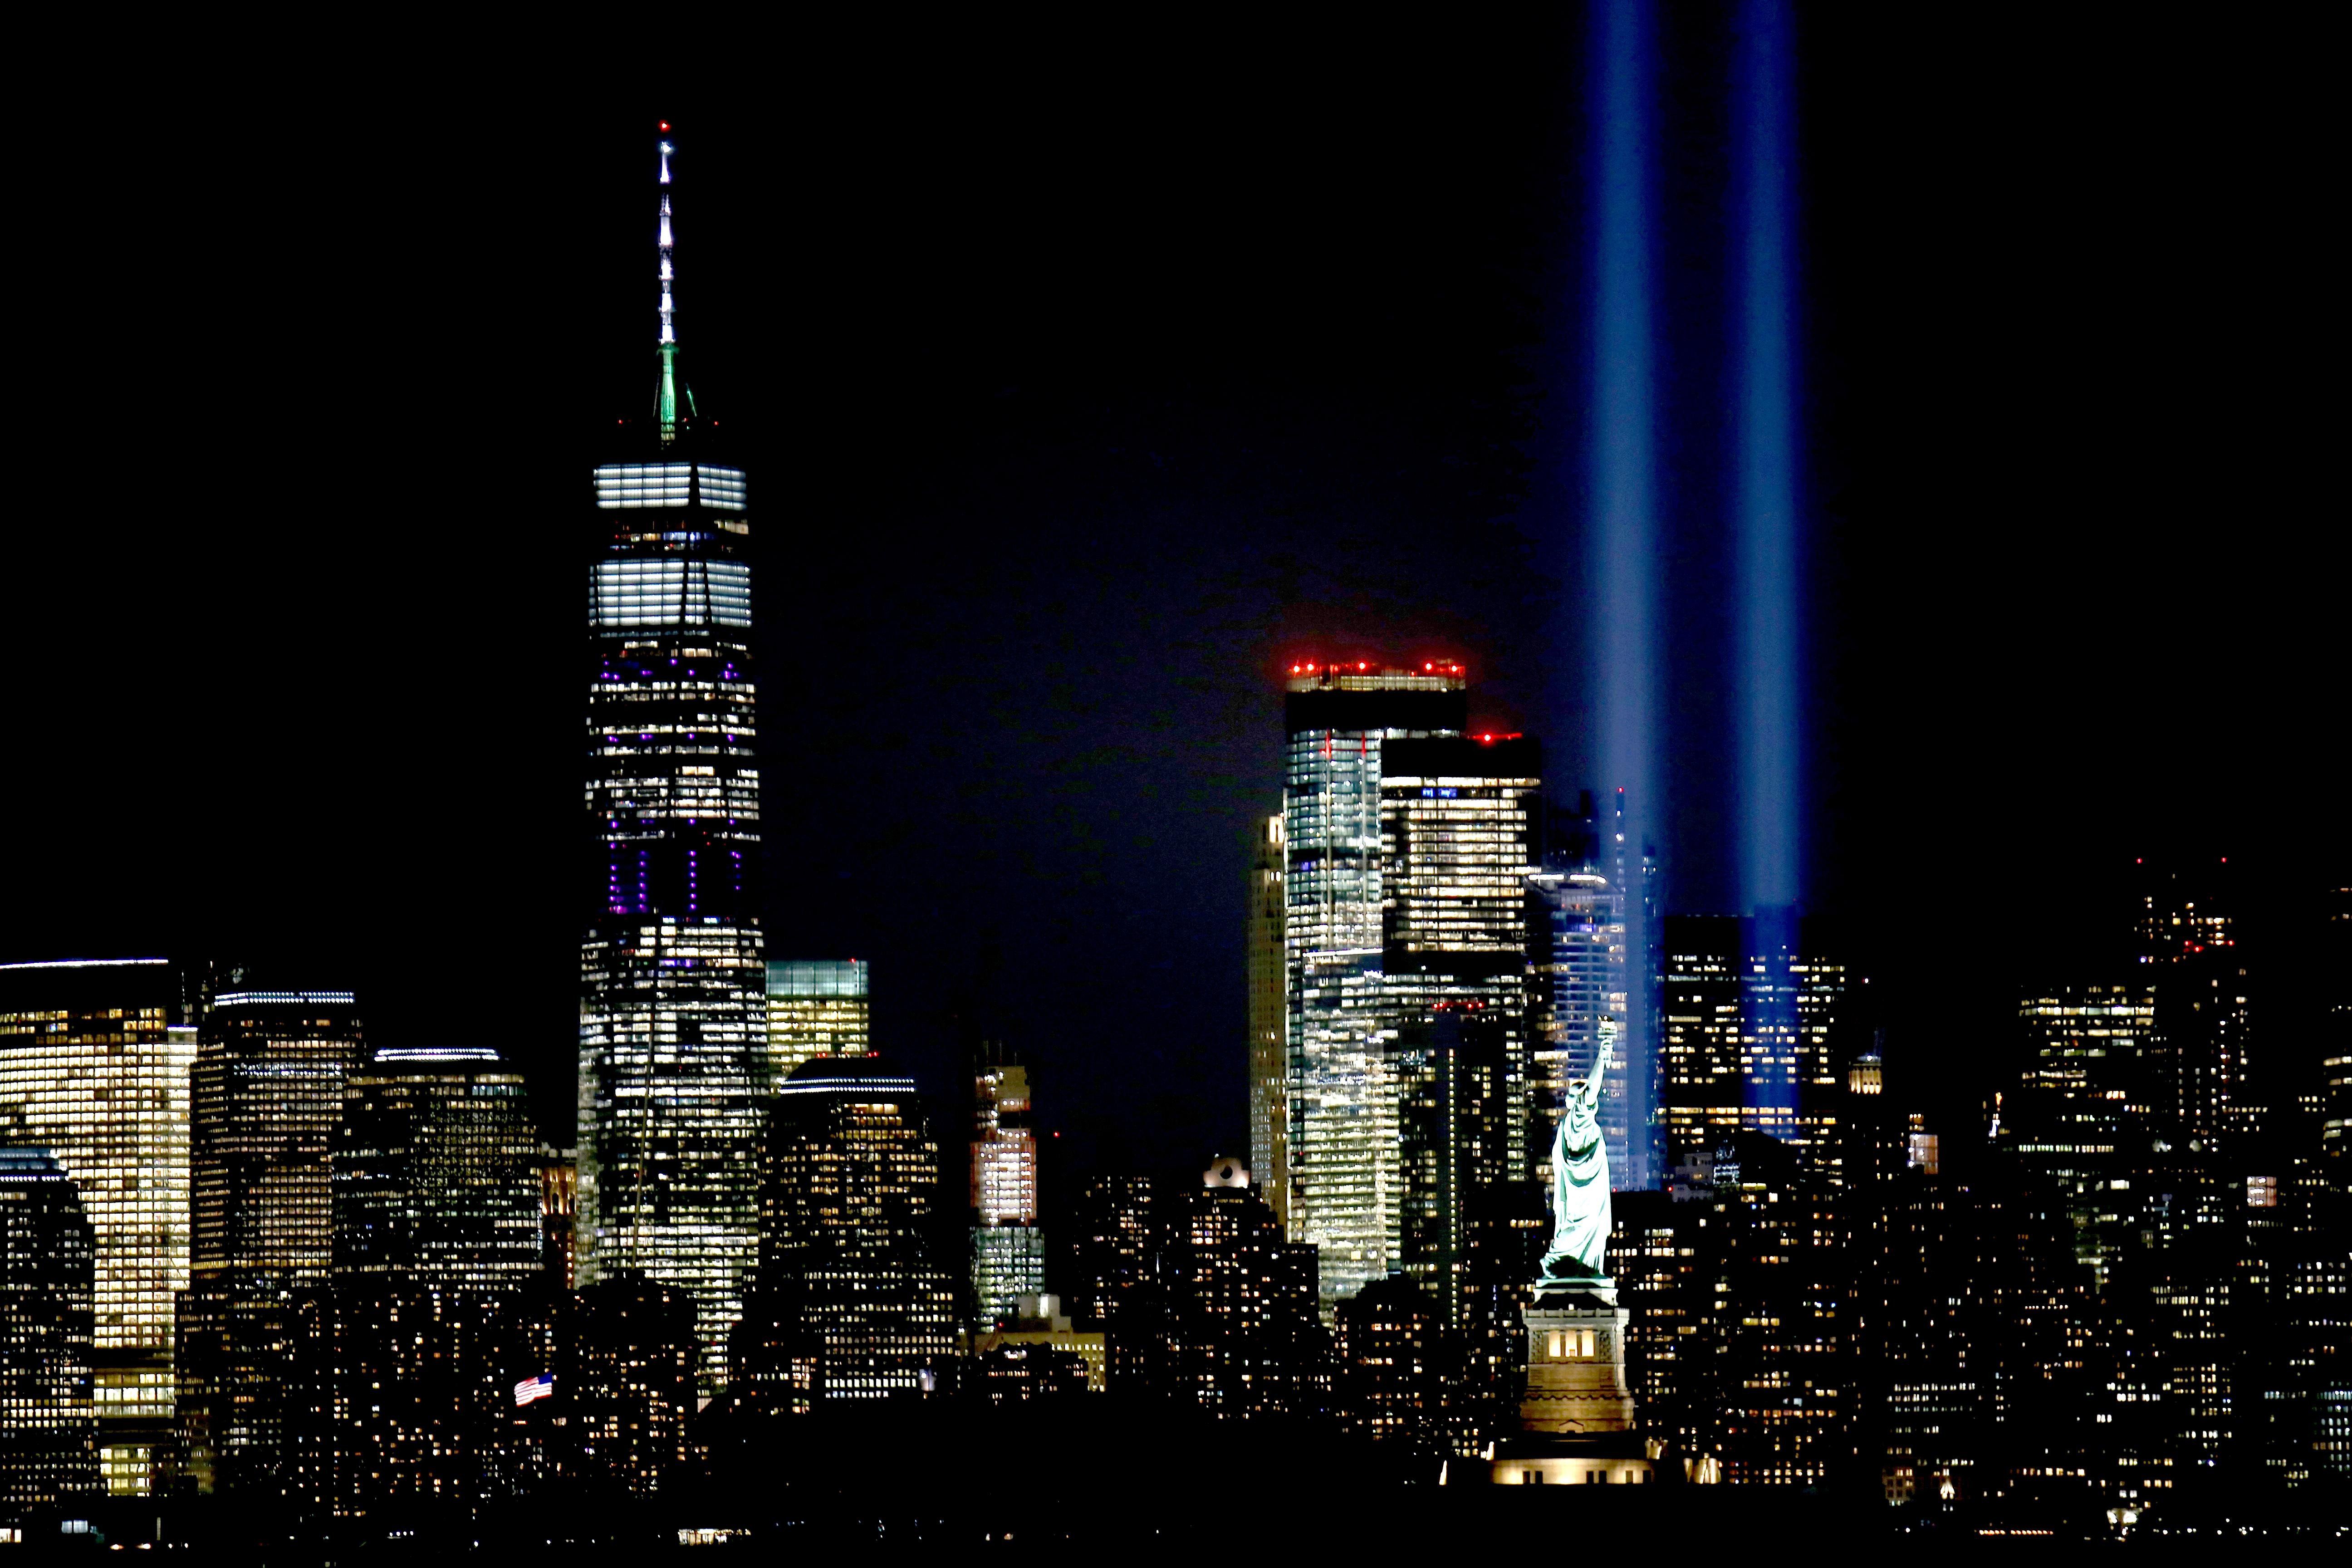 Push for of 'Towers of 9/11 memorial